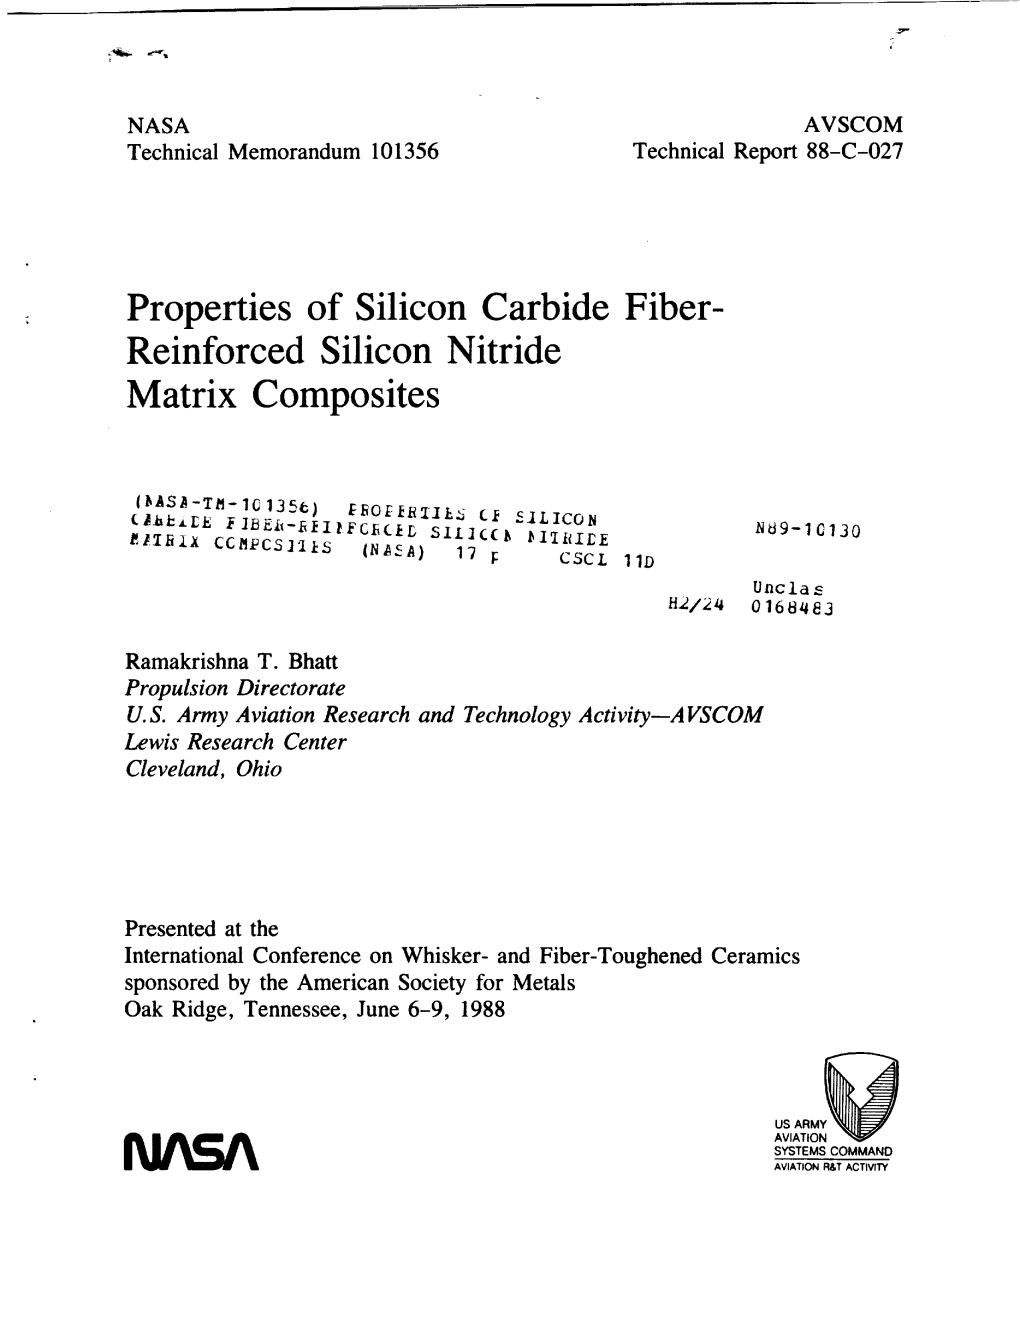 Properties of Silicon Carbide Fiber- Reinforced Silicon Nitride Matrix Composites